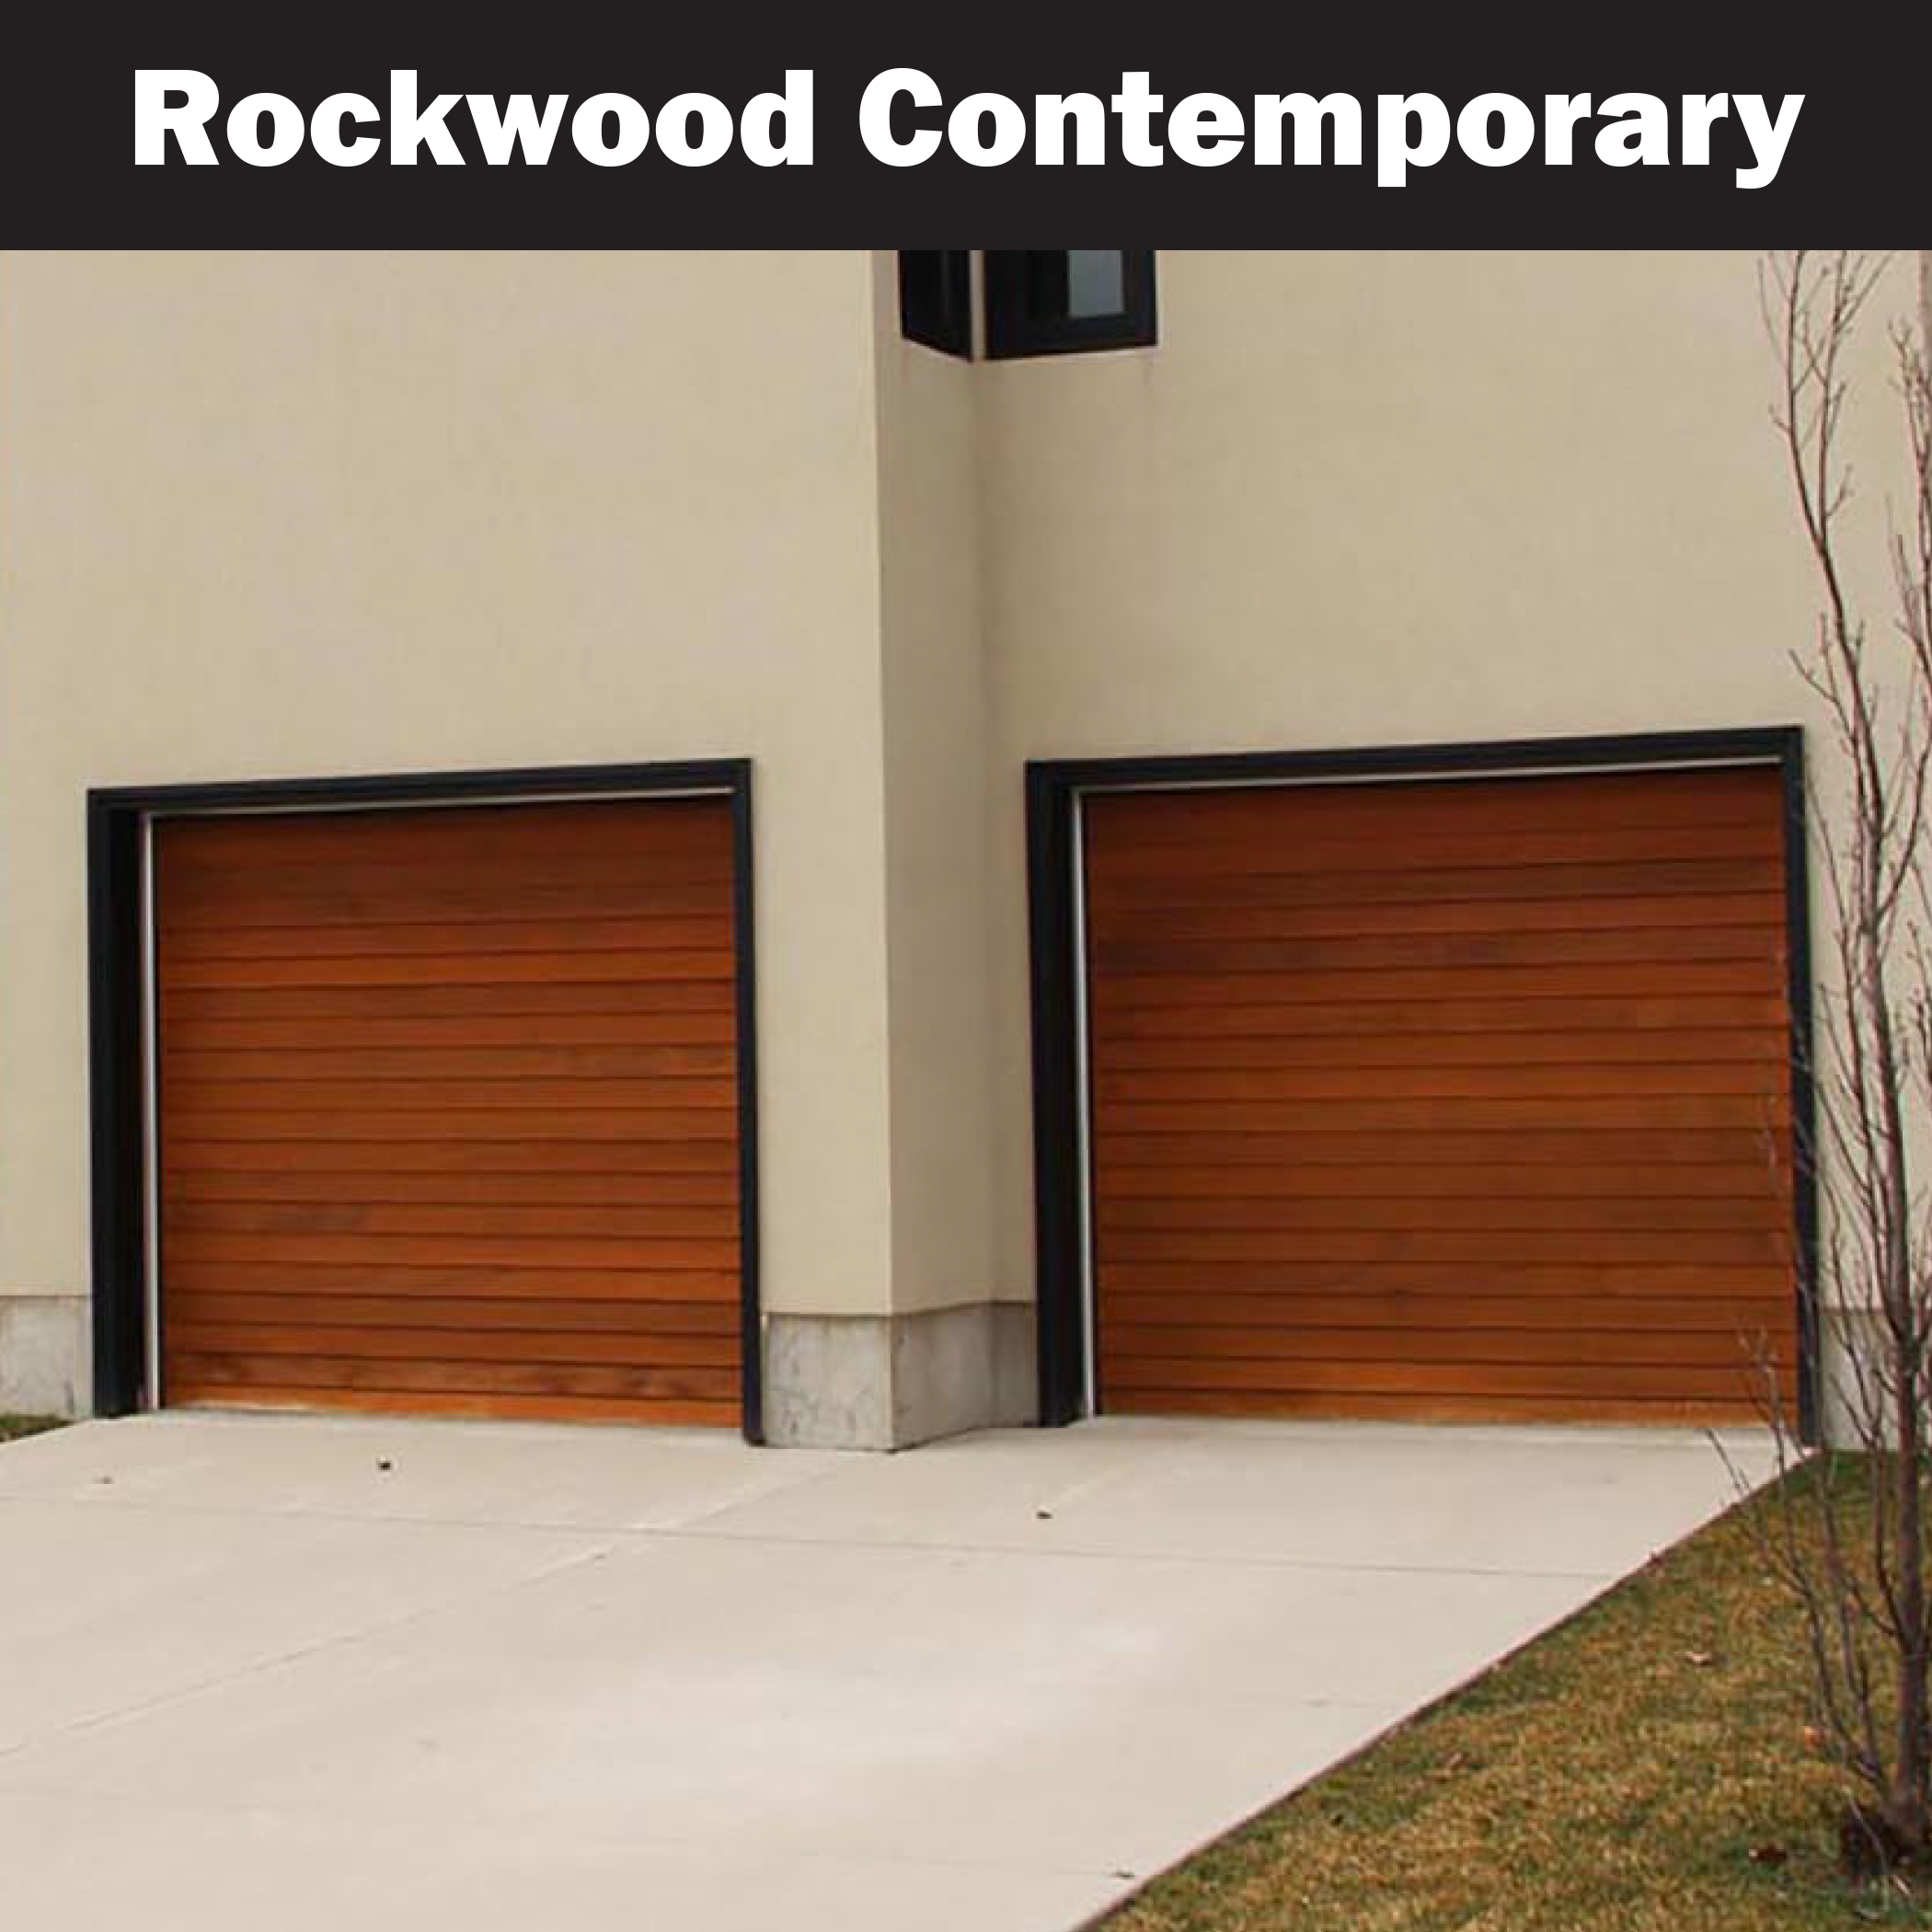 Rockwood Contemporary.jpg